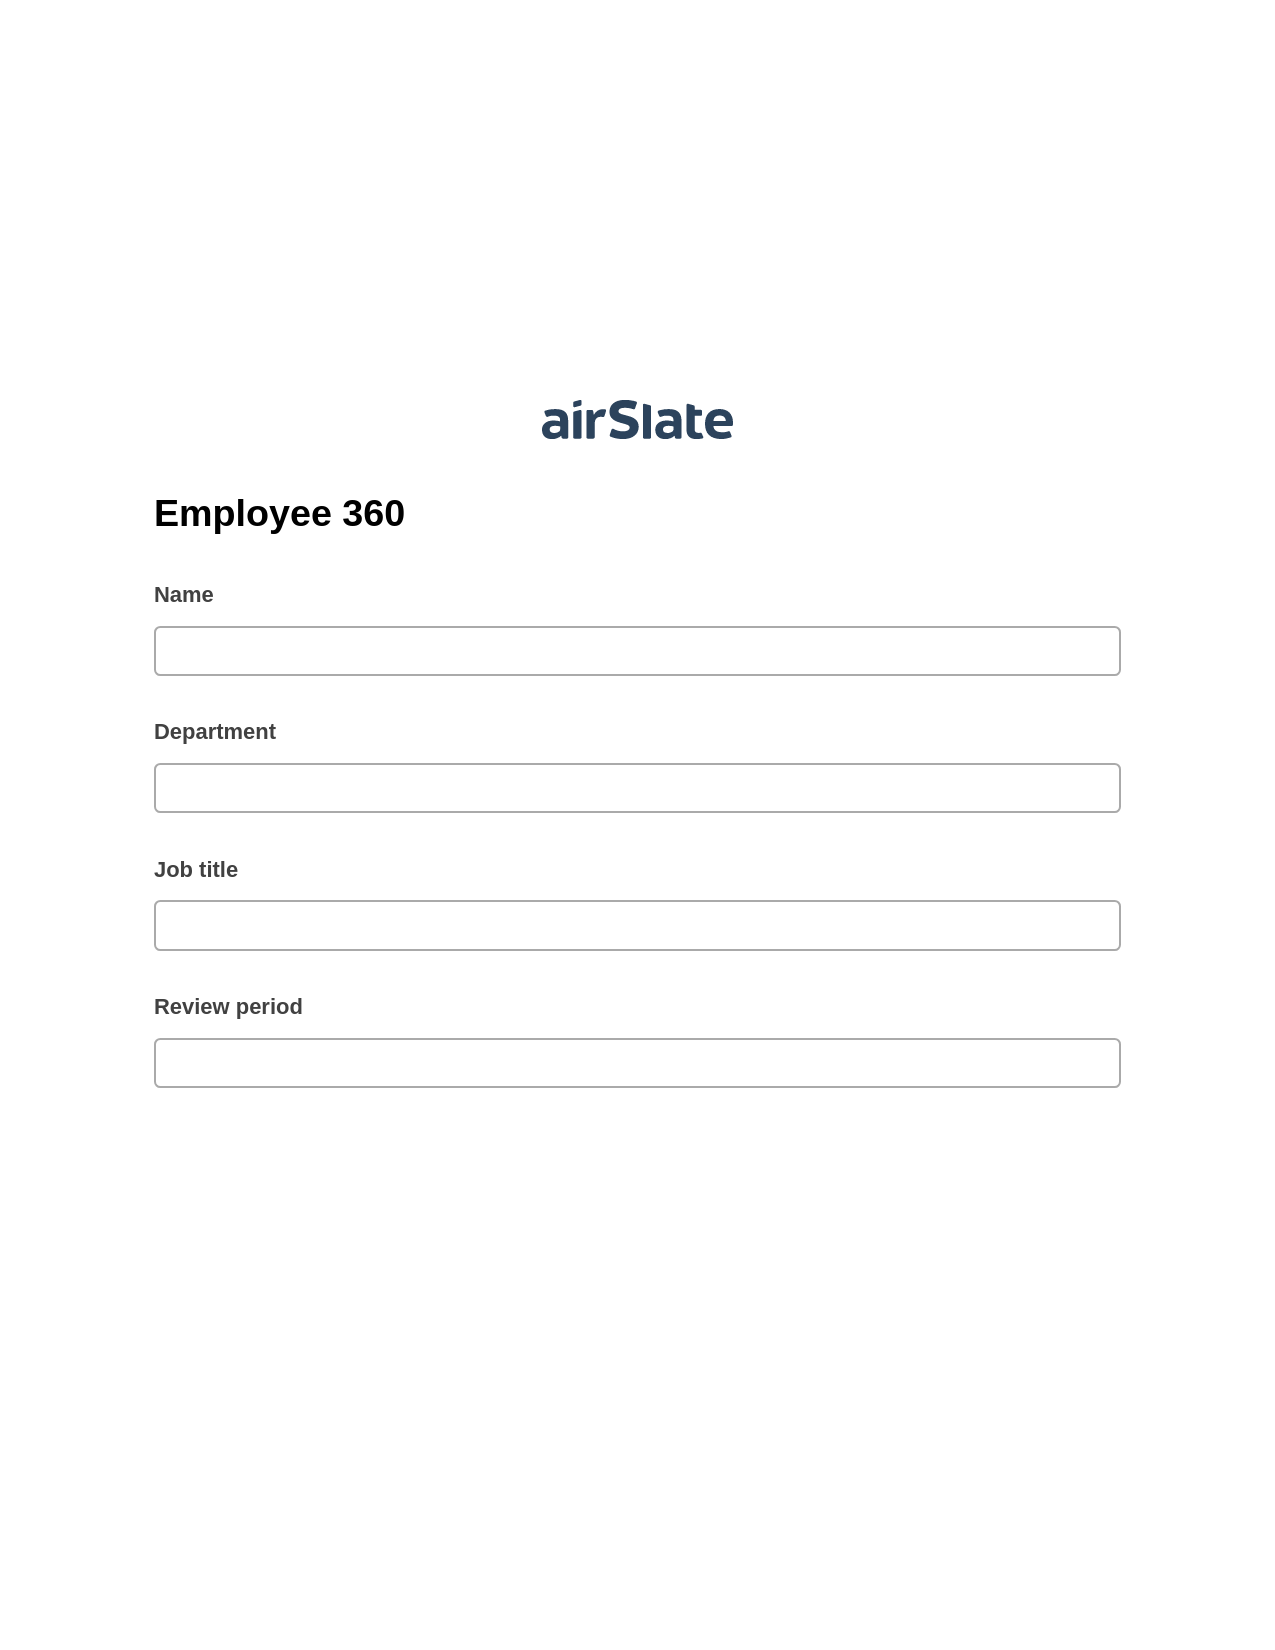 Employee 360 Prefill from NetSuite records, Invoke Salesforce Process Bot, Export to Smartsheet